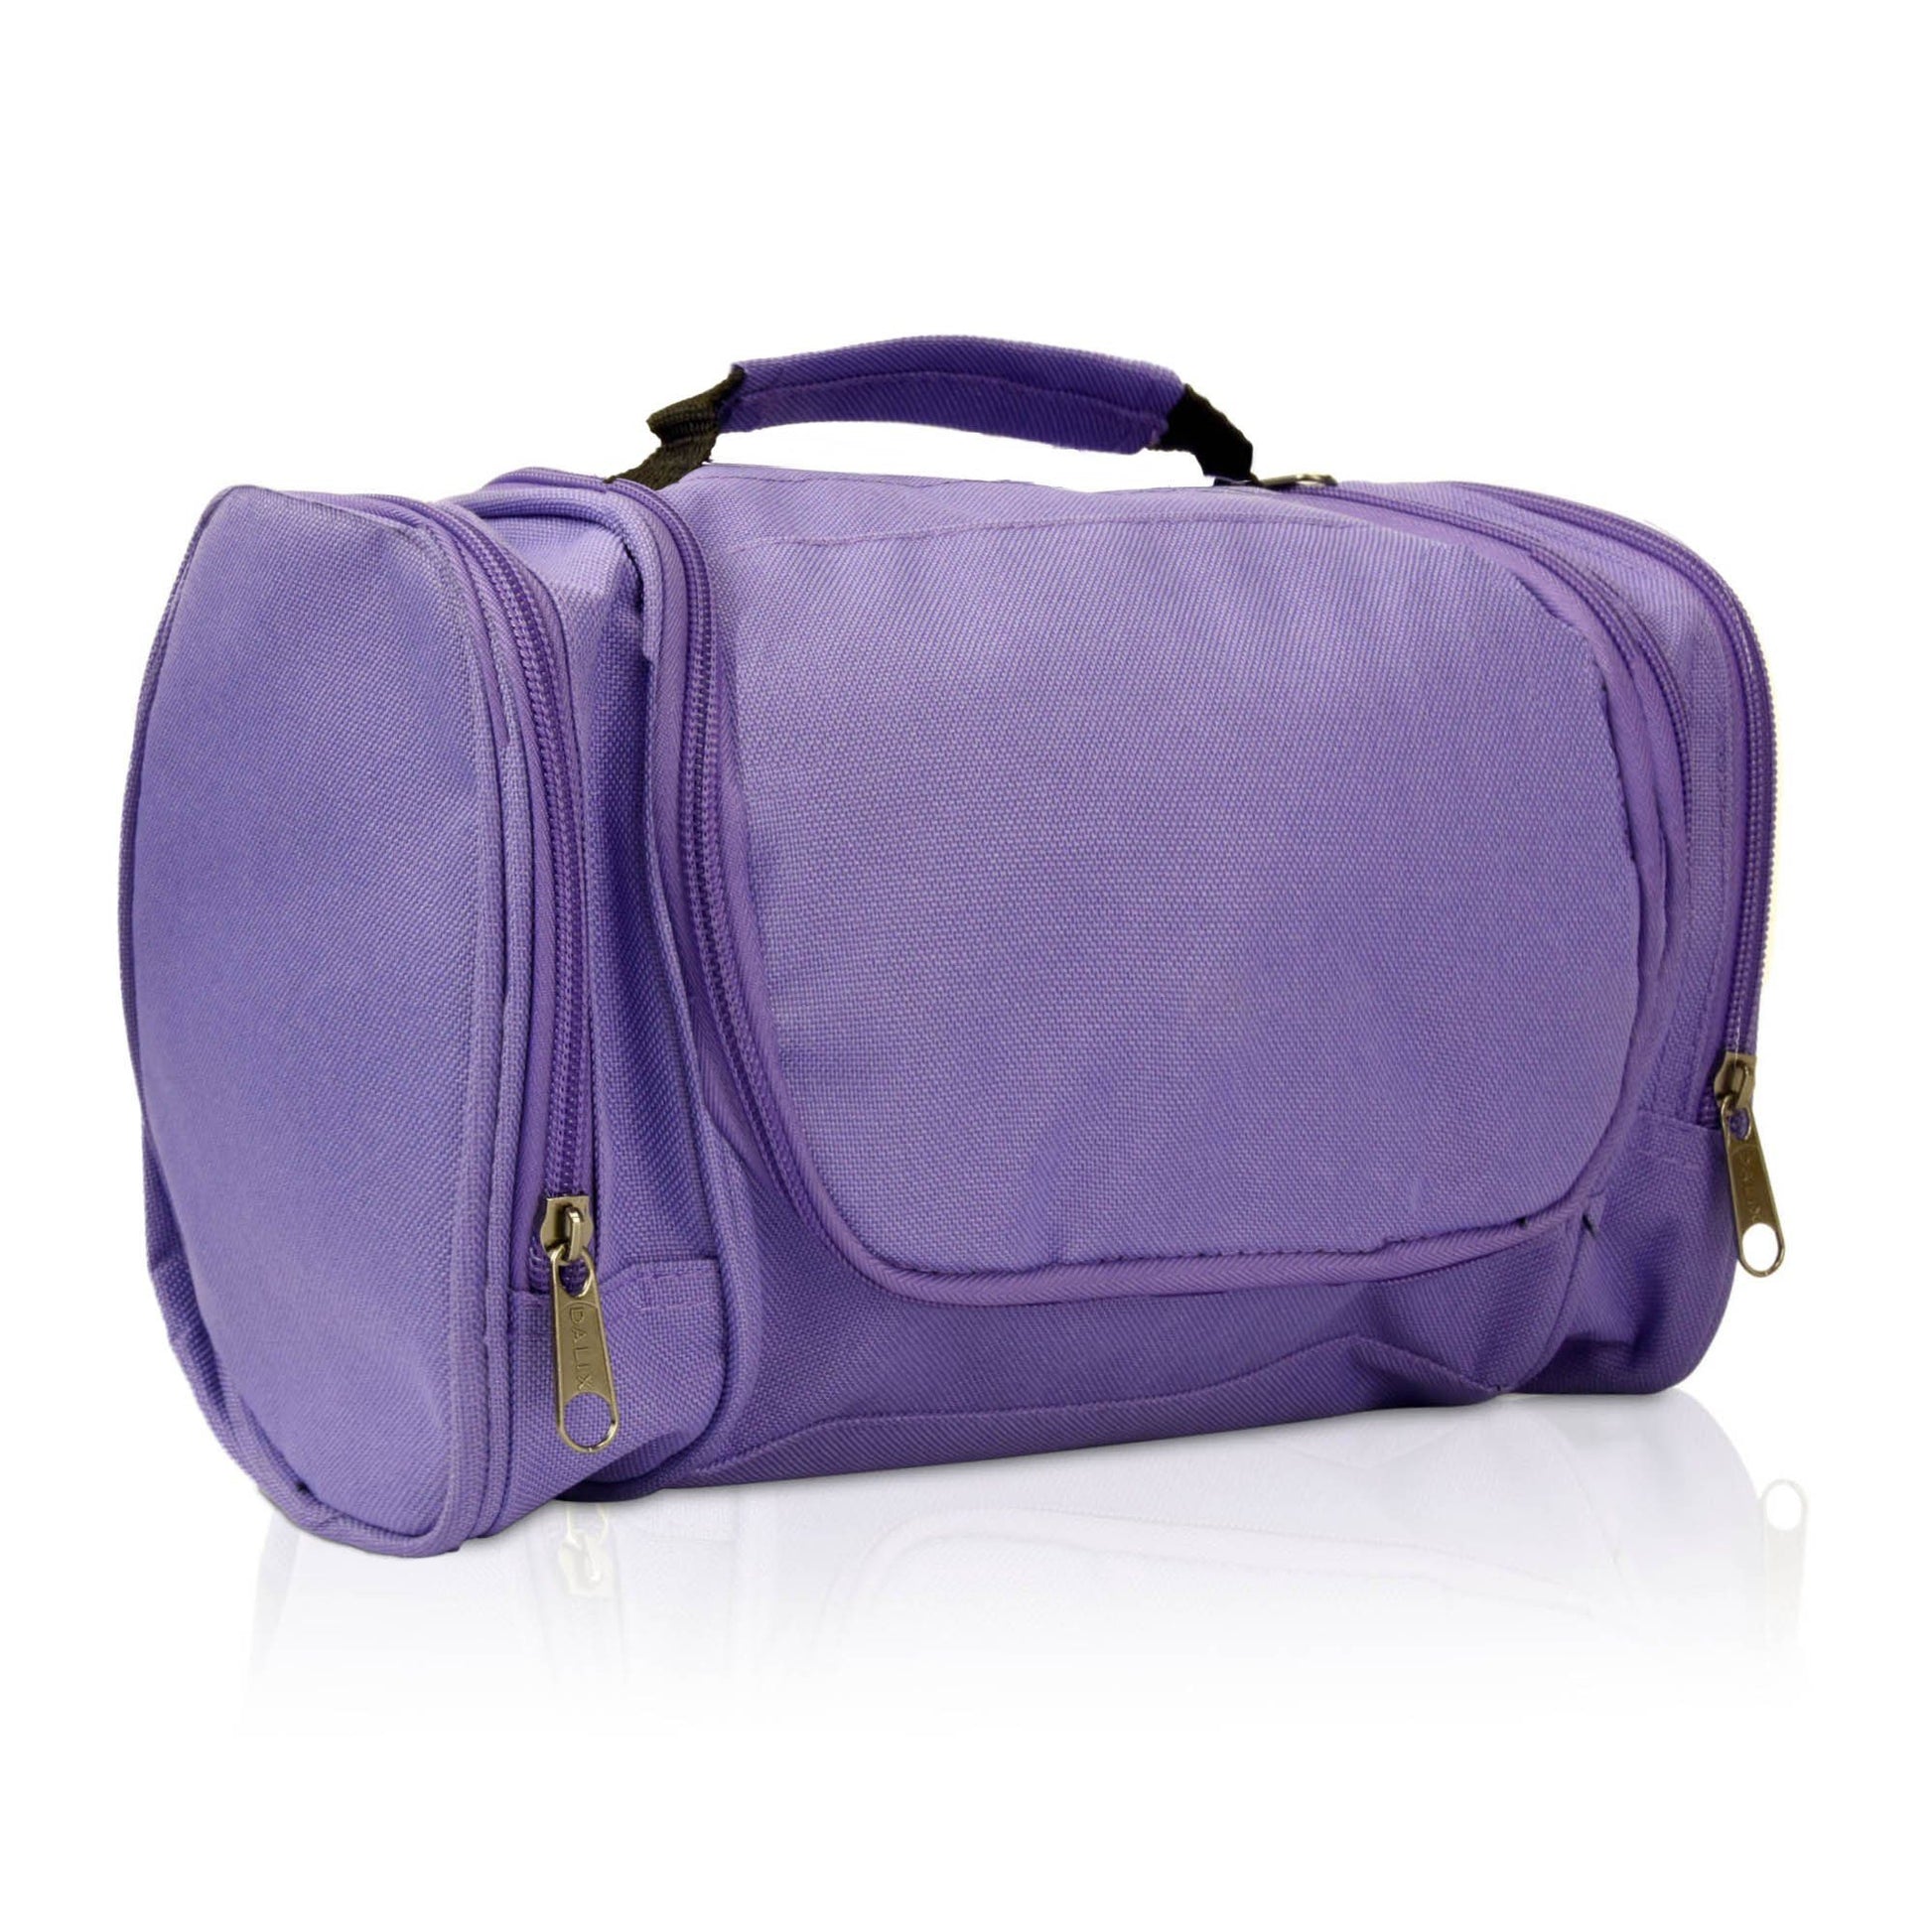 DALIX Hanging Travel Toiletry Kit Accessories Bag (8 Colors) Business DALIX Purple 